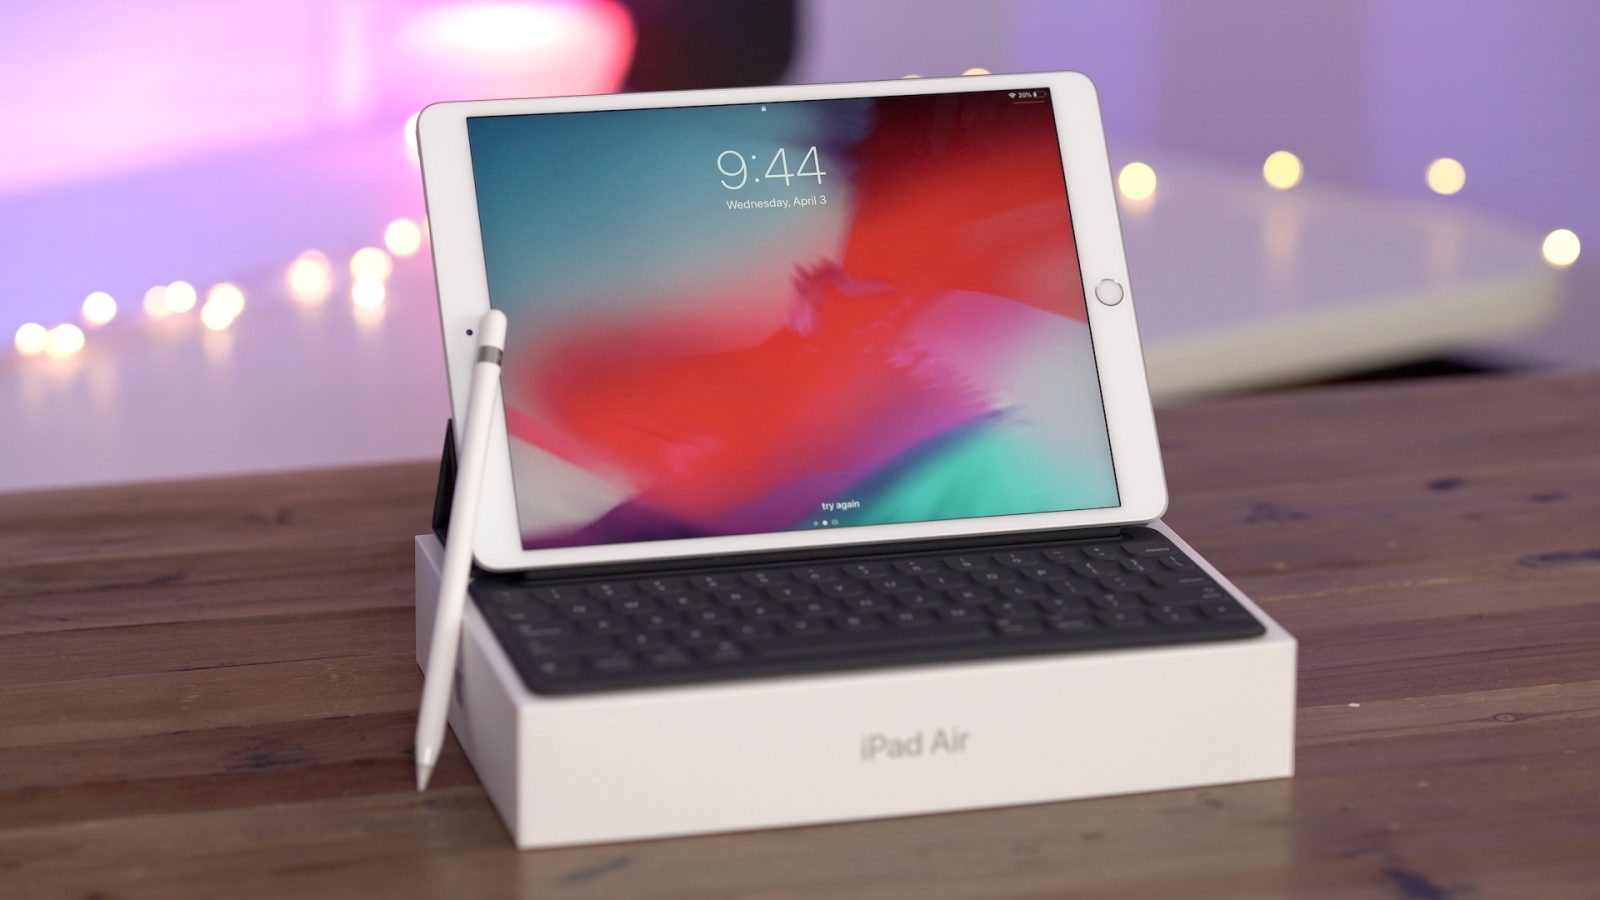 iPad-Air-3-Review-9to5Mac.jpg